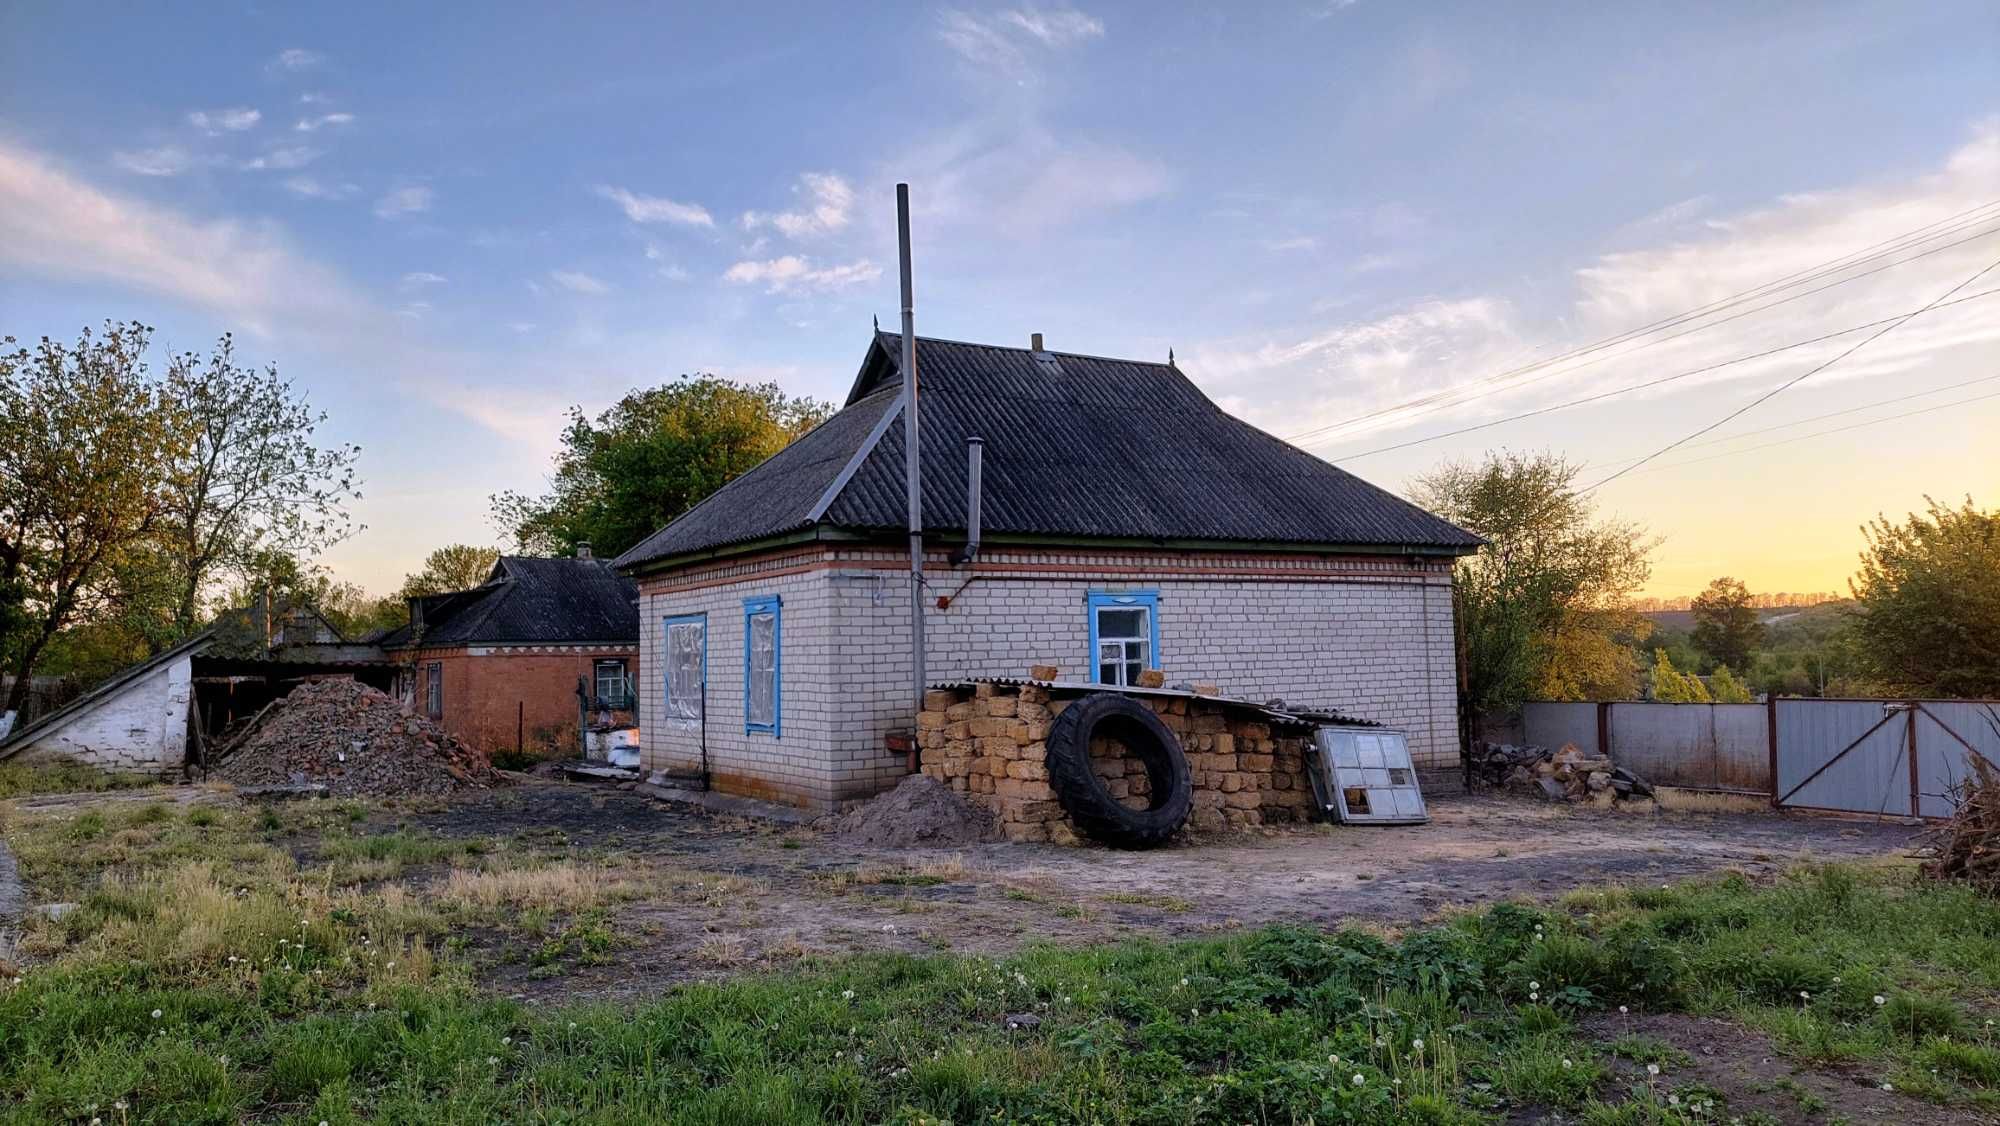 Продаю будинок (хату, дачу) або ОБМІНЯЮ на ПАЙ, Полтавська область